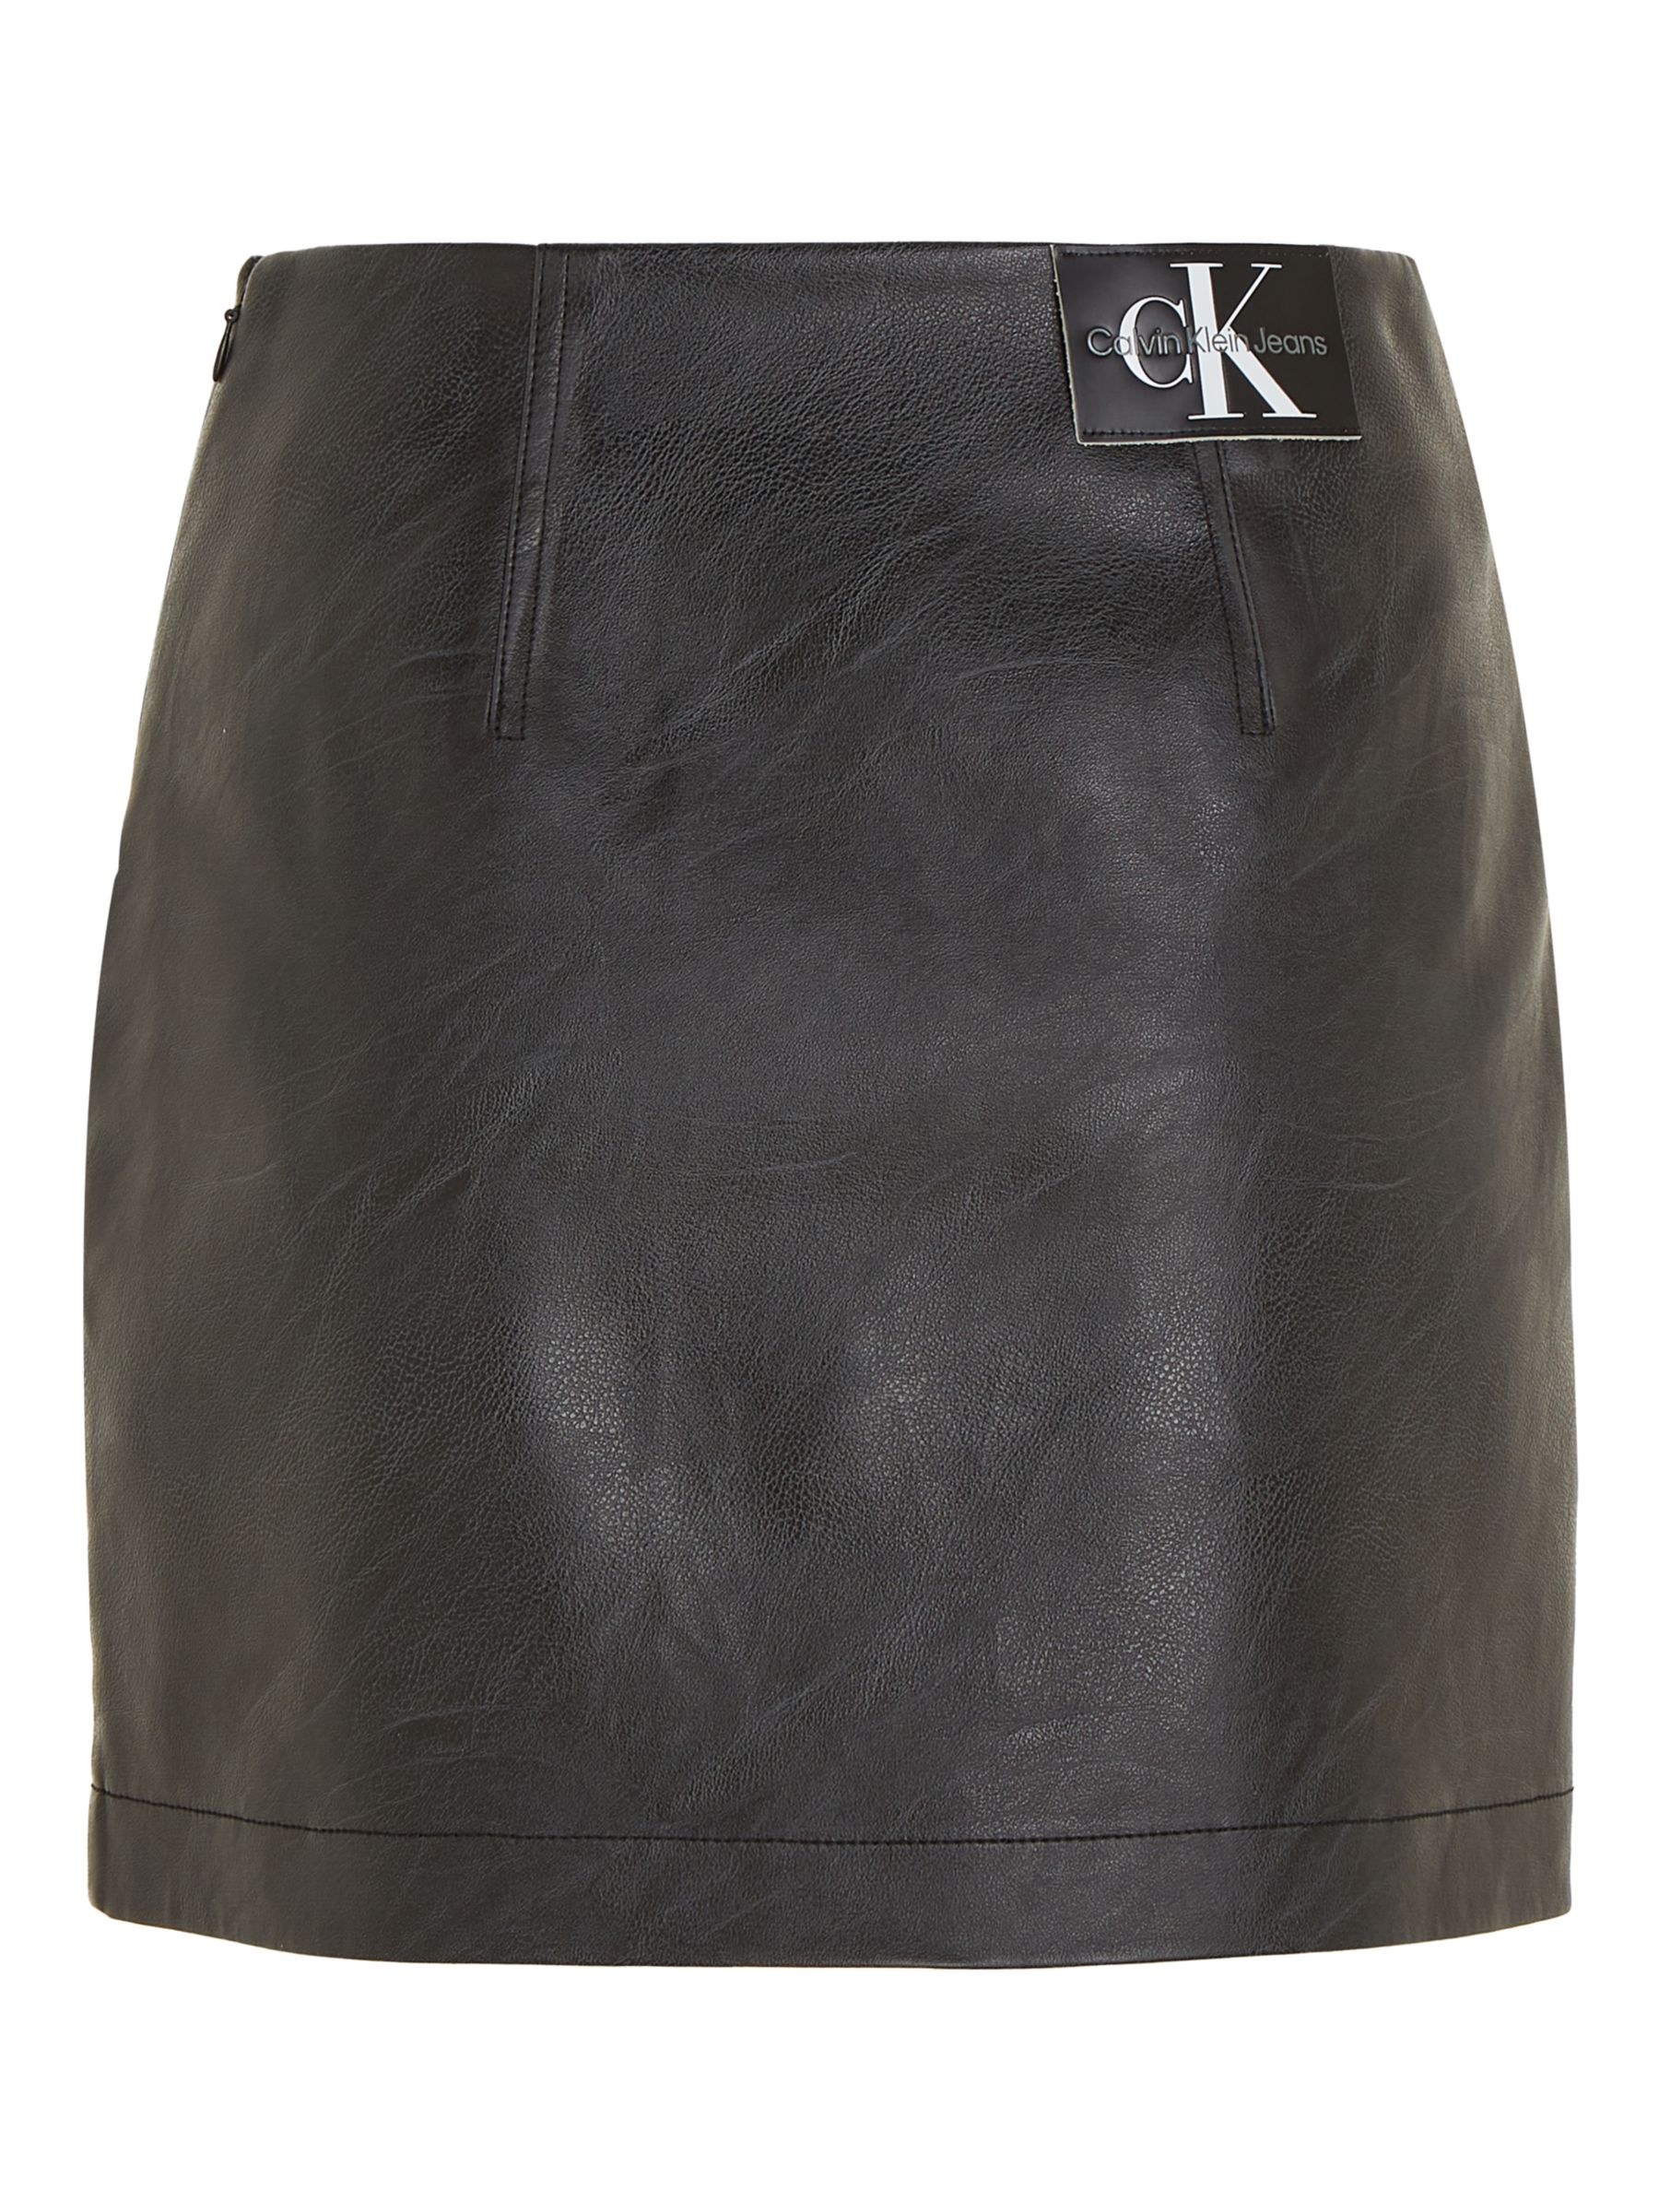 Calvin Klein Faux Leather Mini Skirt, Black at John Lewis & Partners